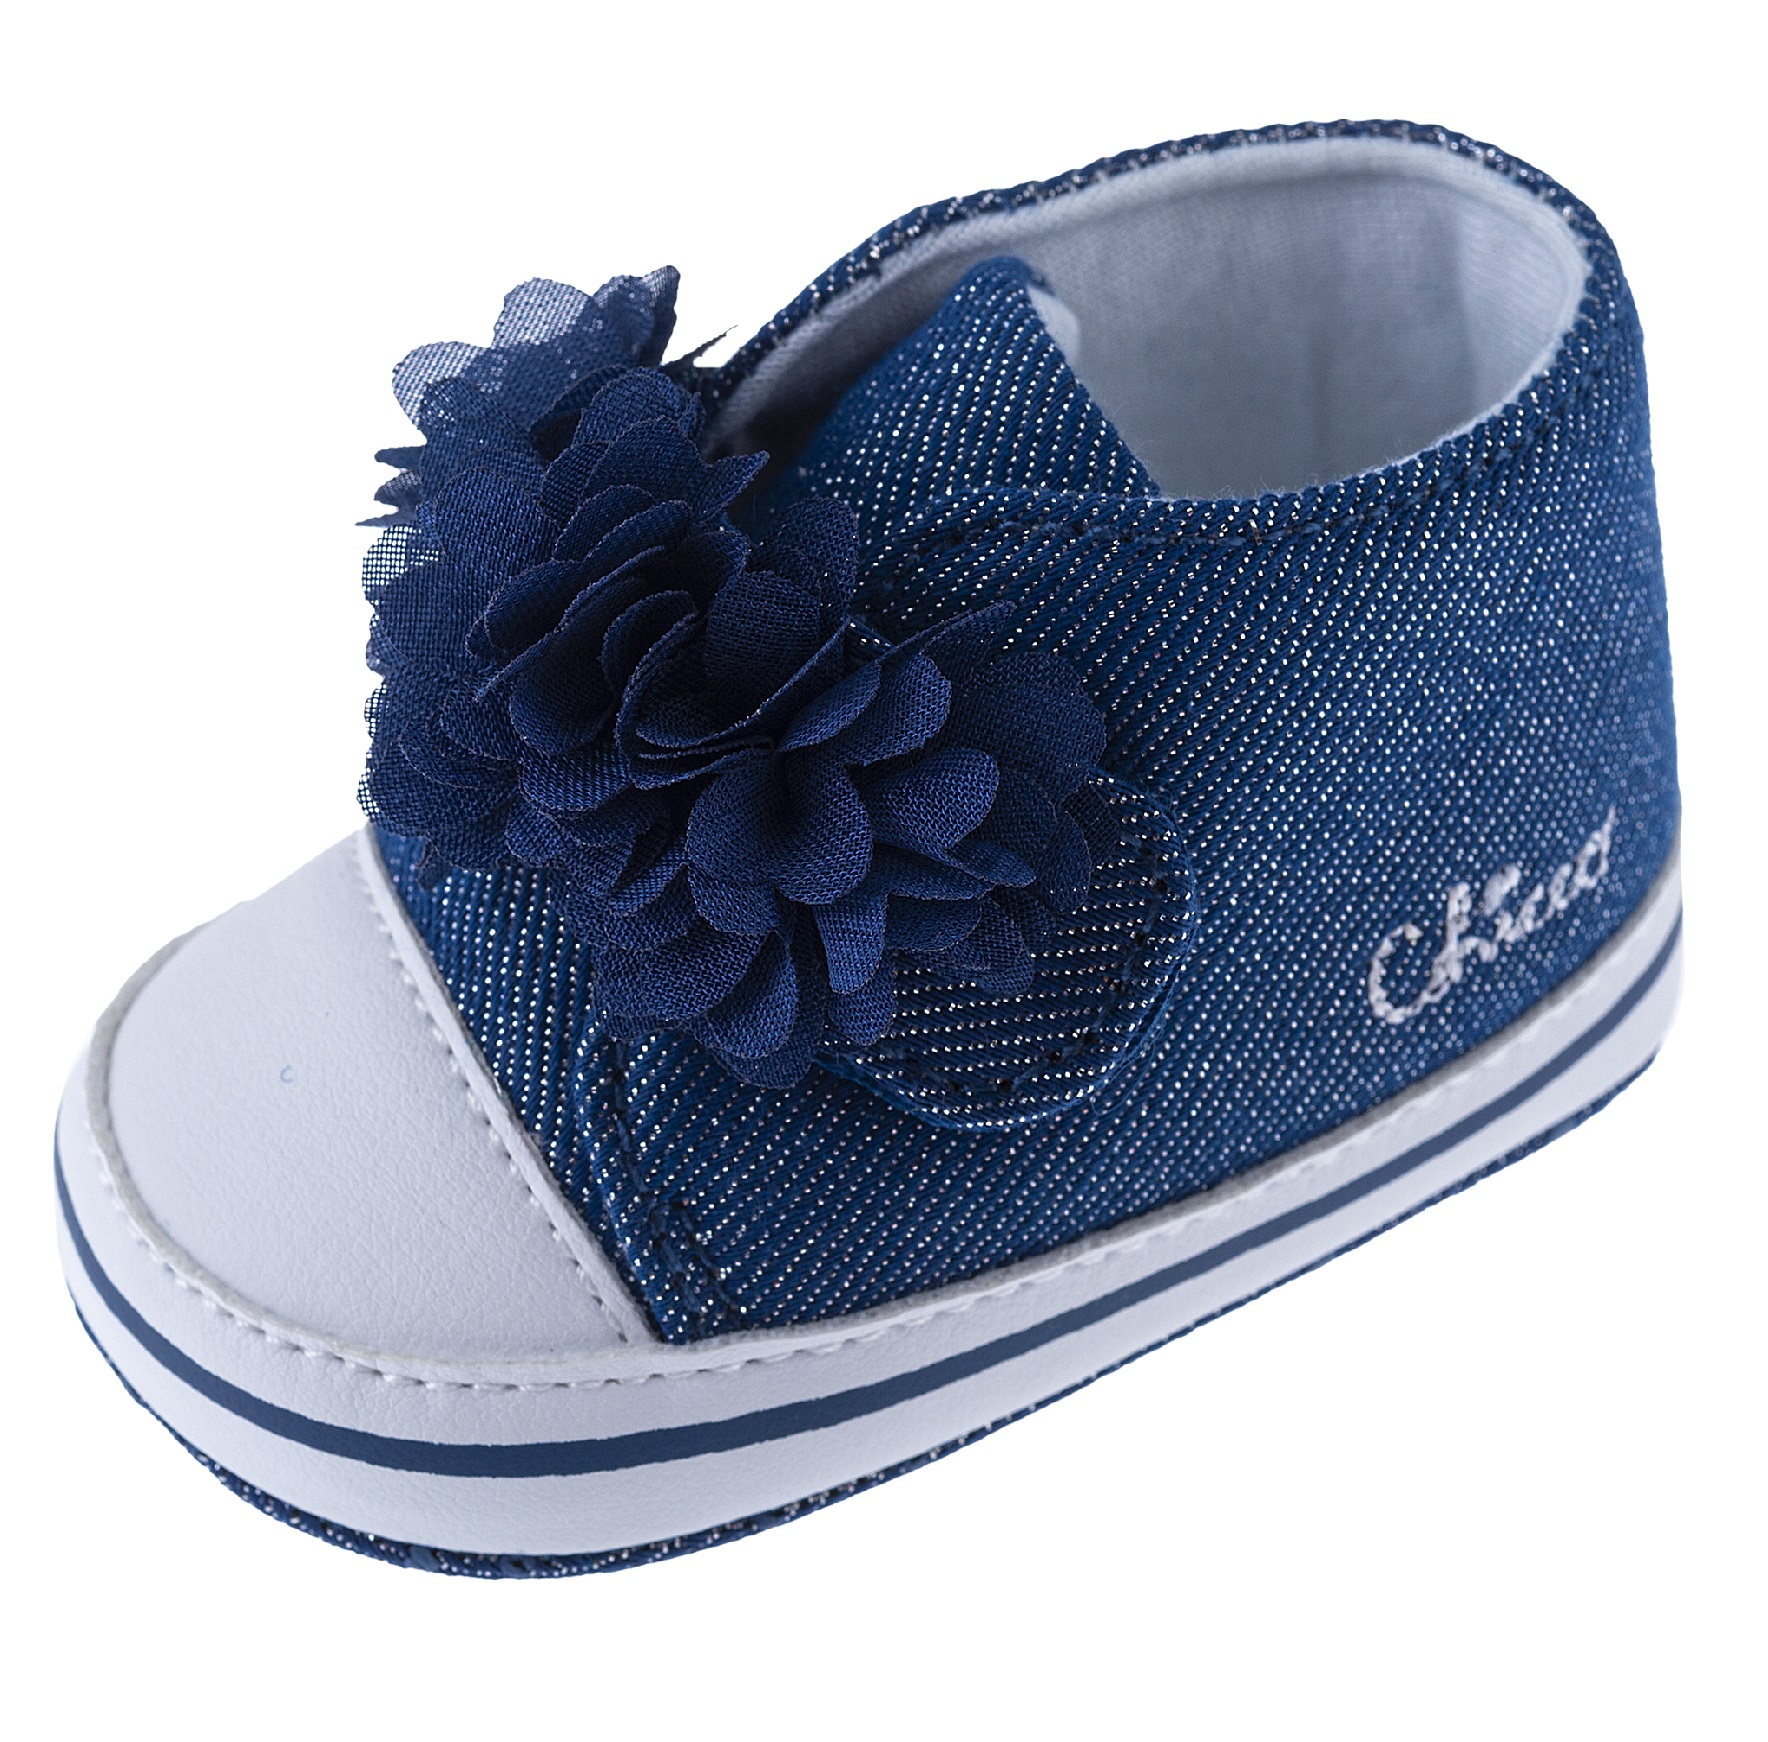 Ghete Copii Chicco Naira Material Textil, Bleumarin Cu Model, 67043-62p